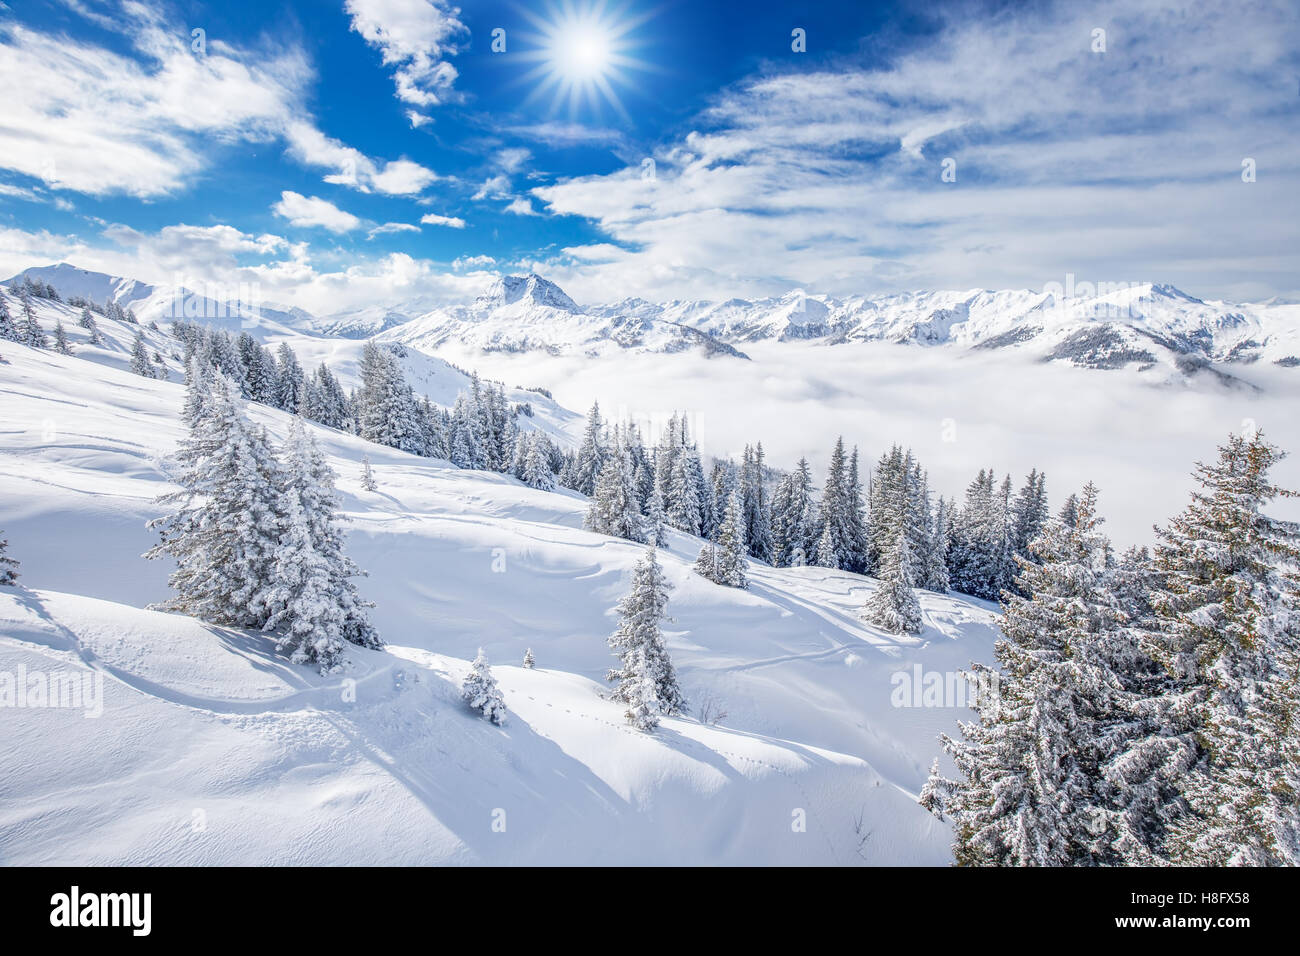 Trees covered by fresh snow in Tyrolian Alps. Stunning winter landscape near Kitzbuhel, Austria. Stock Photo